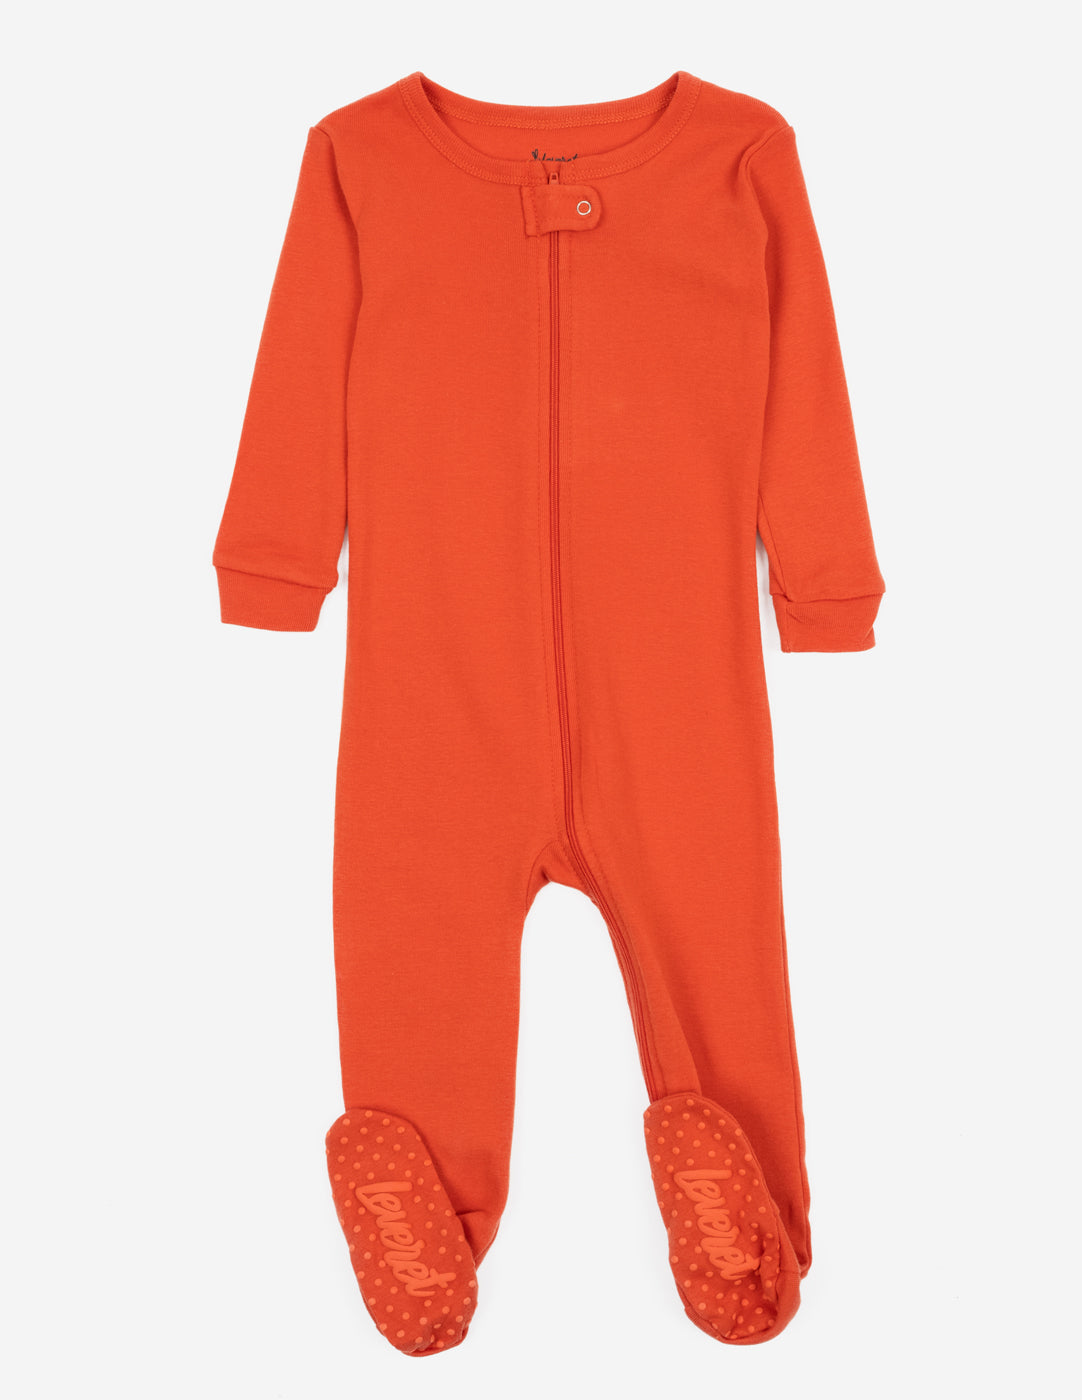 solid color orange baby footed pajamas